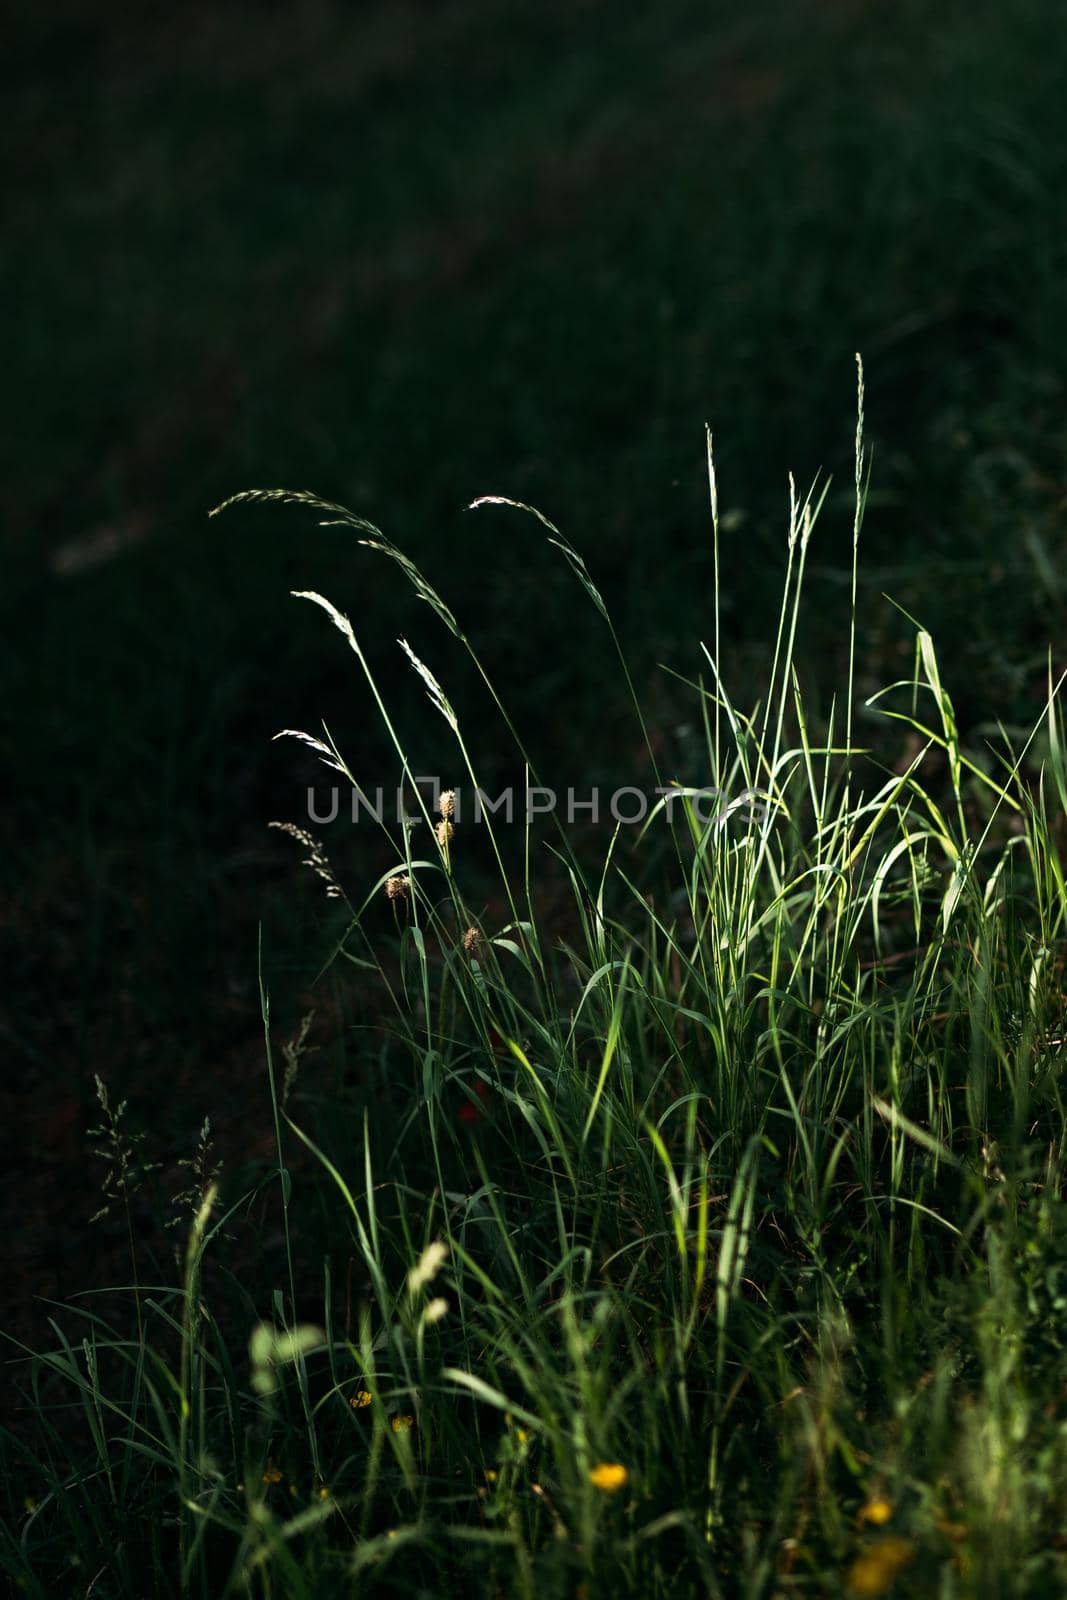 Green grass in sunset light with dark blurred background. by apavlin